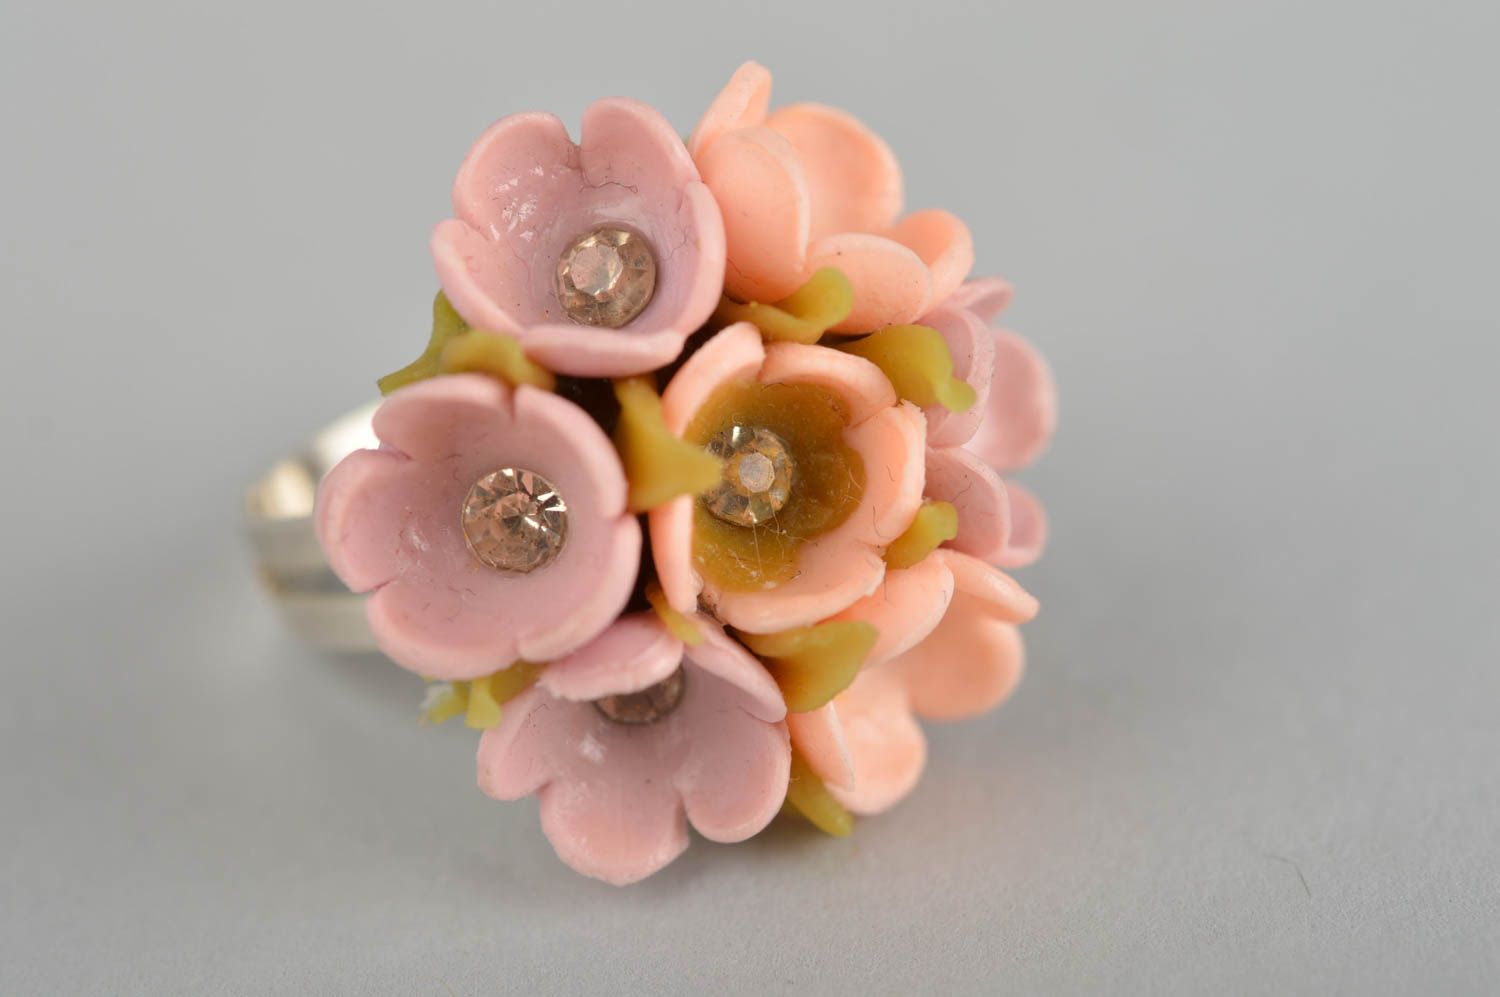 Gentle handmade flower ring artisan jewelry designs handmade gifts for her photo 1